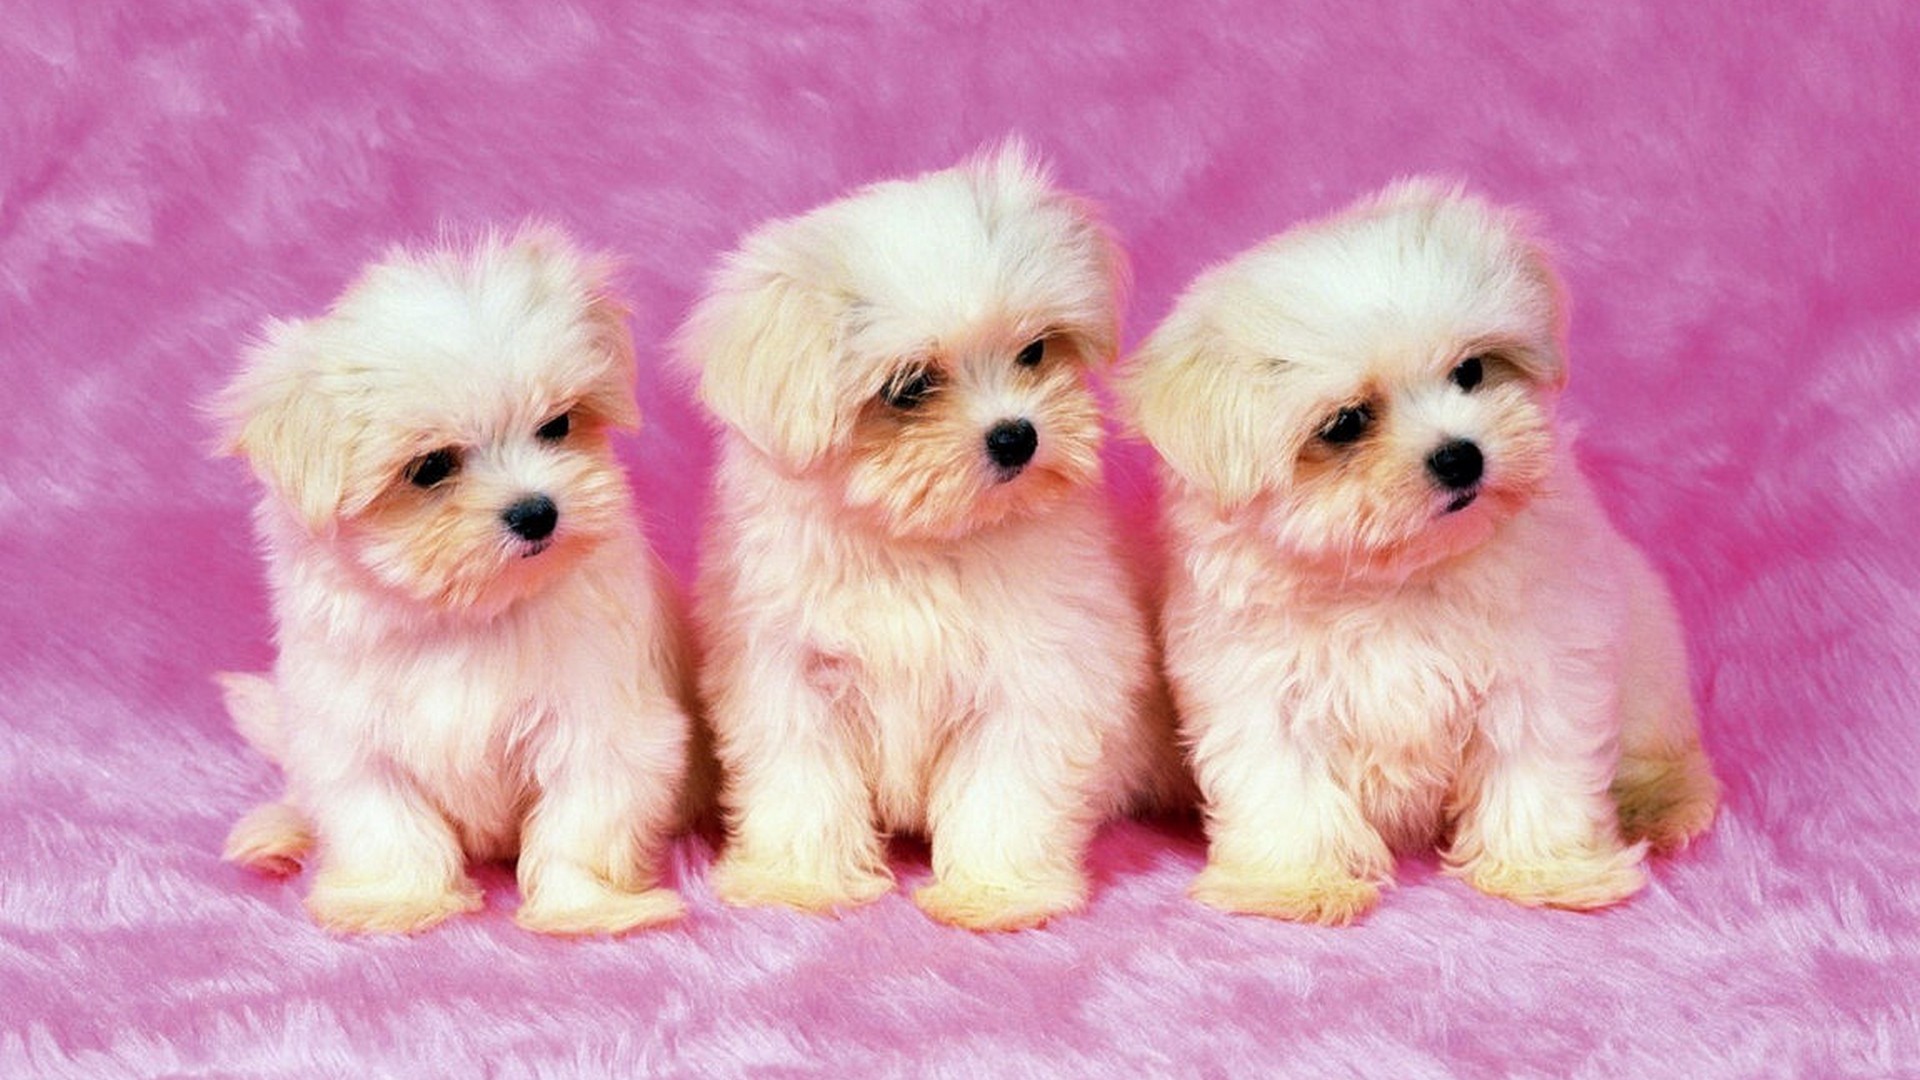 Cute Puppies Background Wallpaper HD 1920x1080